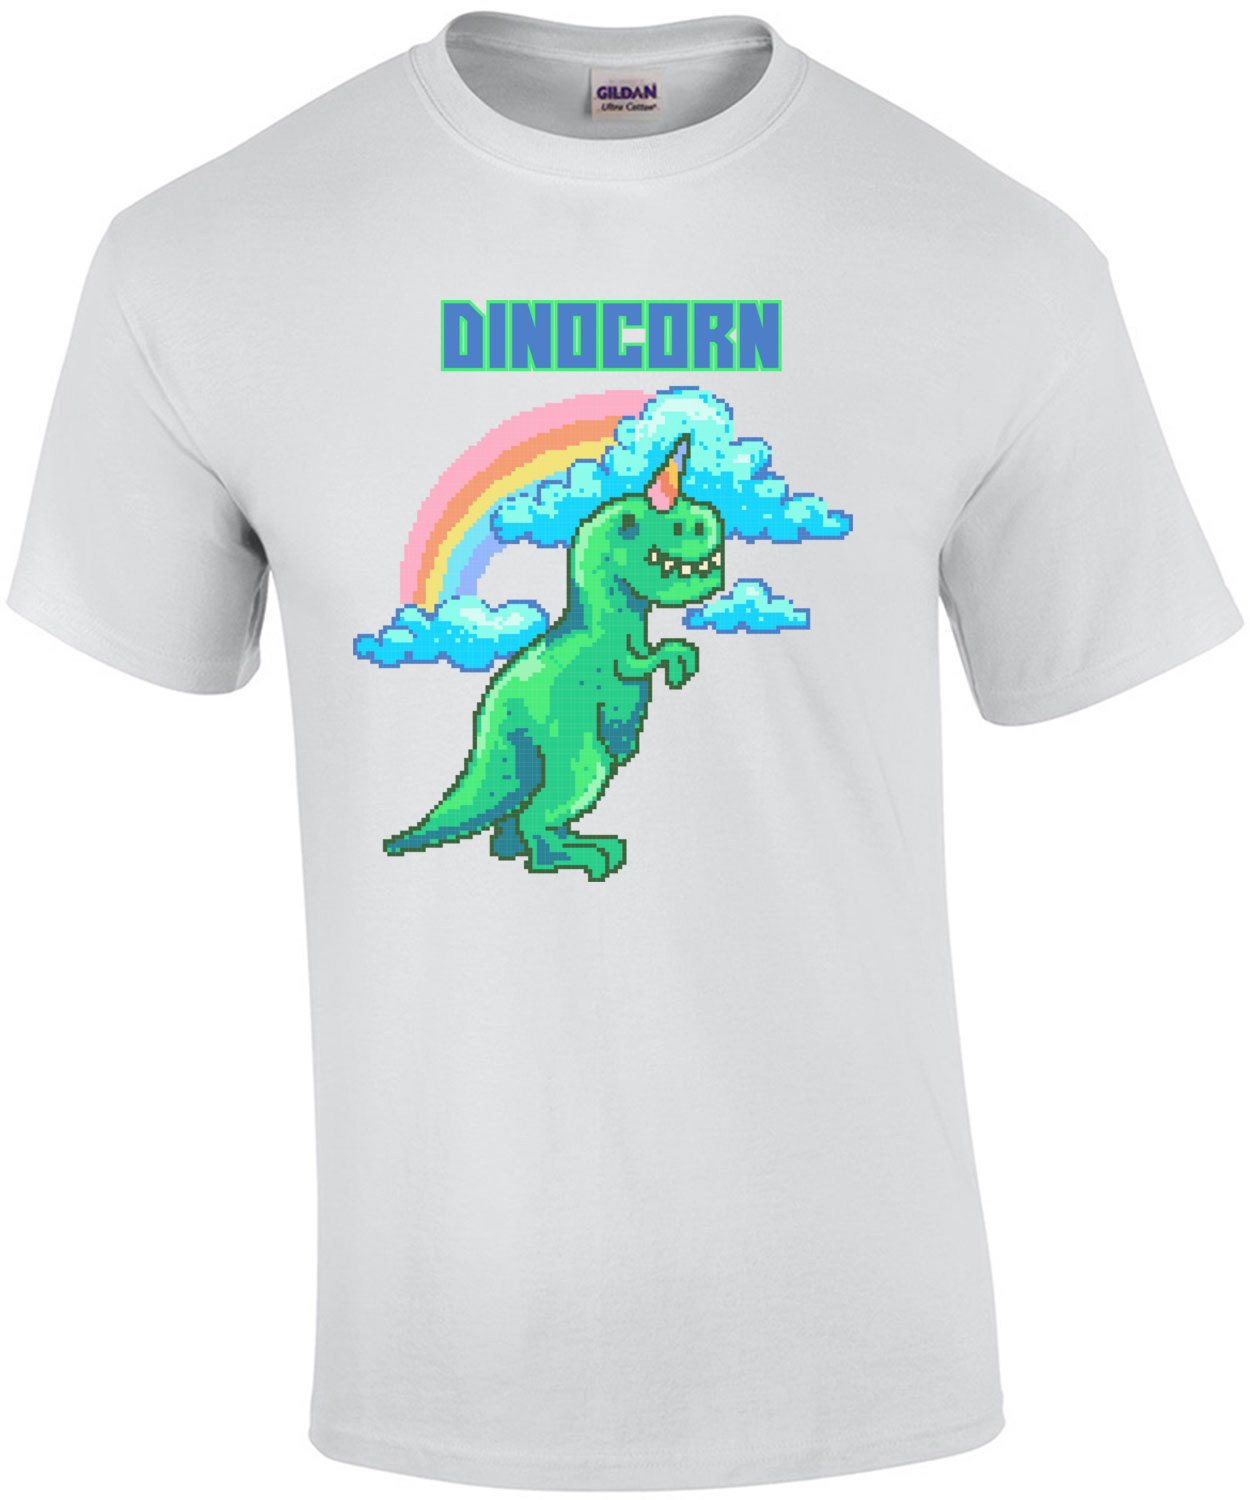 Dinocorn Retro Cute T-Shirt